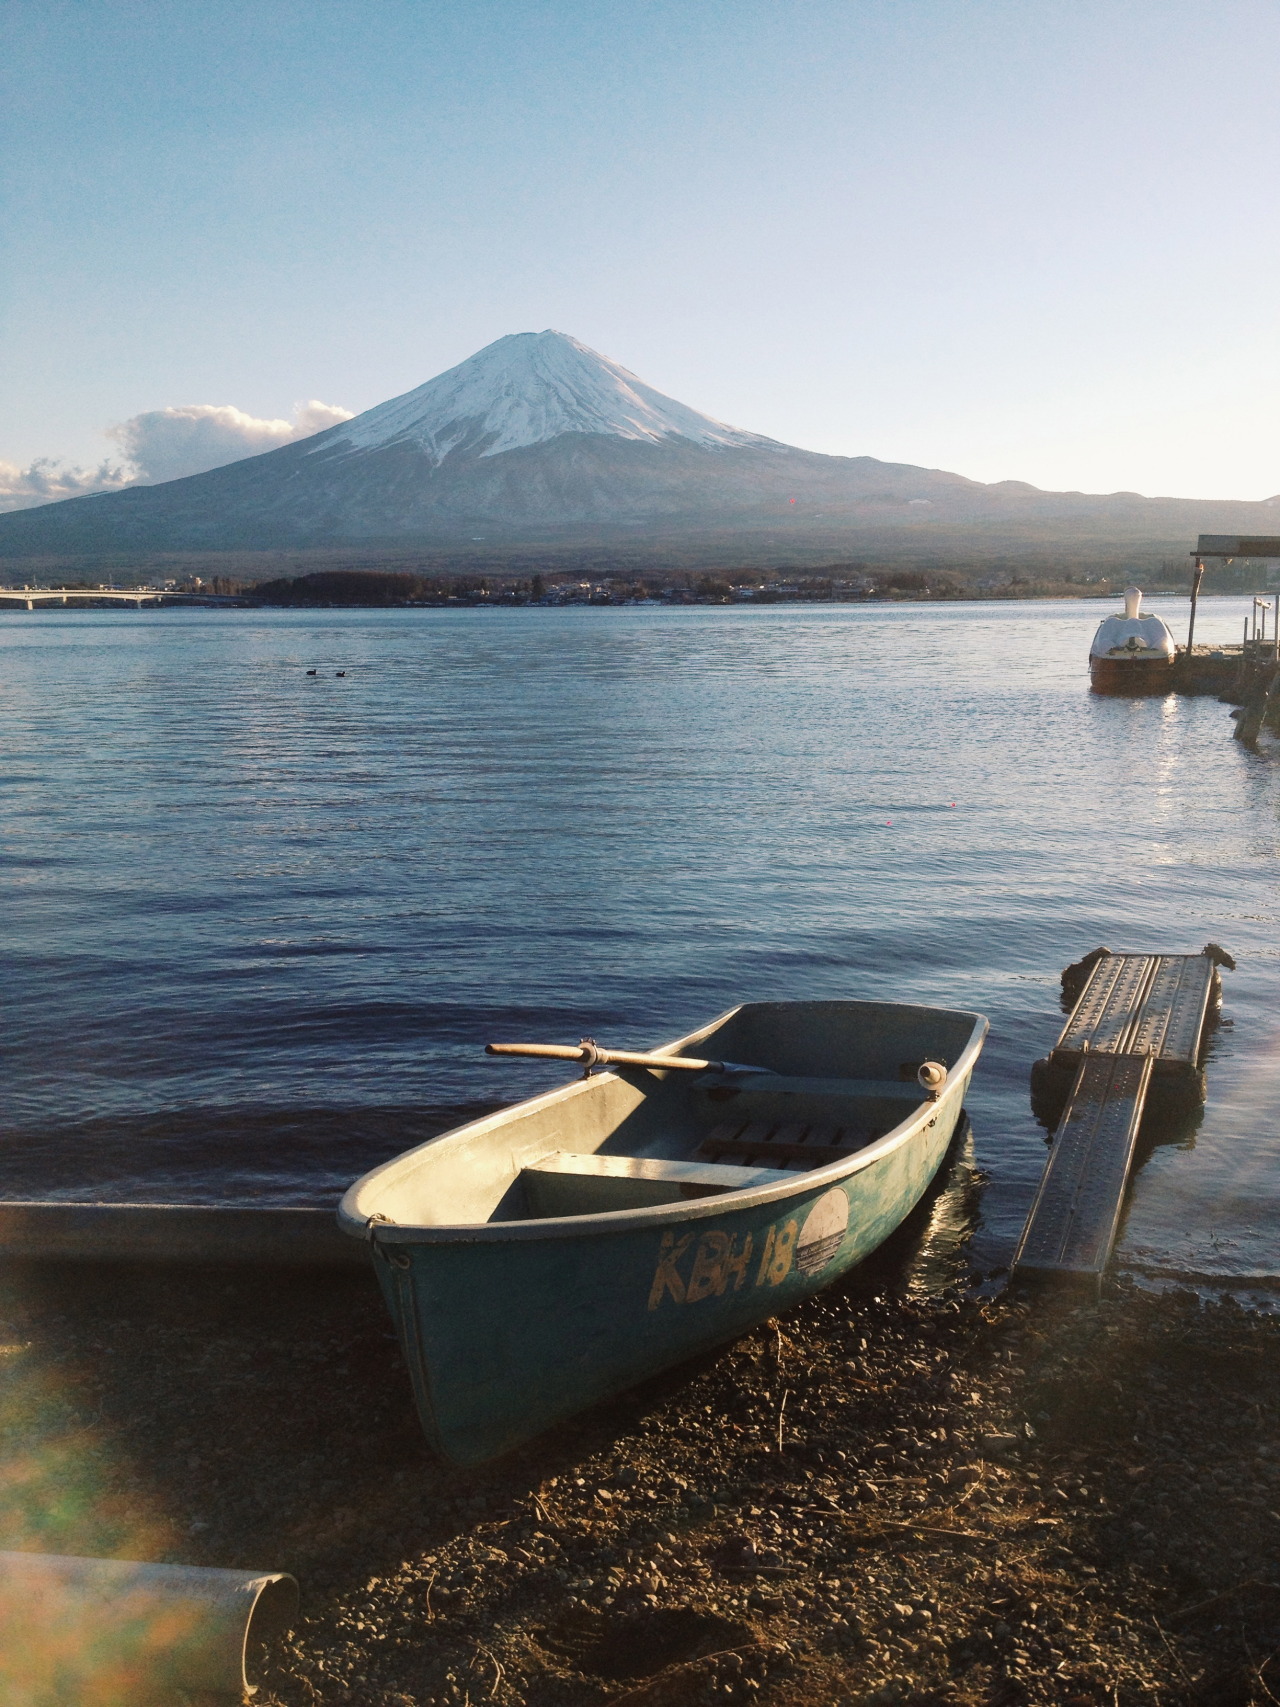 pauline-jpg:  Mt Fuji captured from Lake Kawaguchi Taken with iPhone 4S